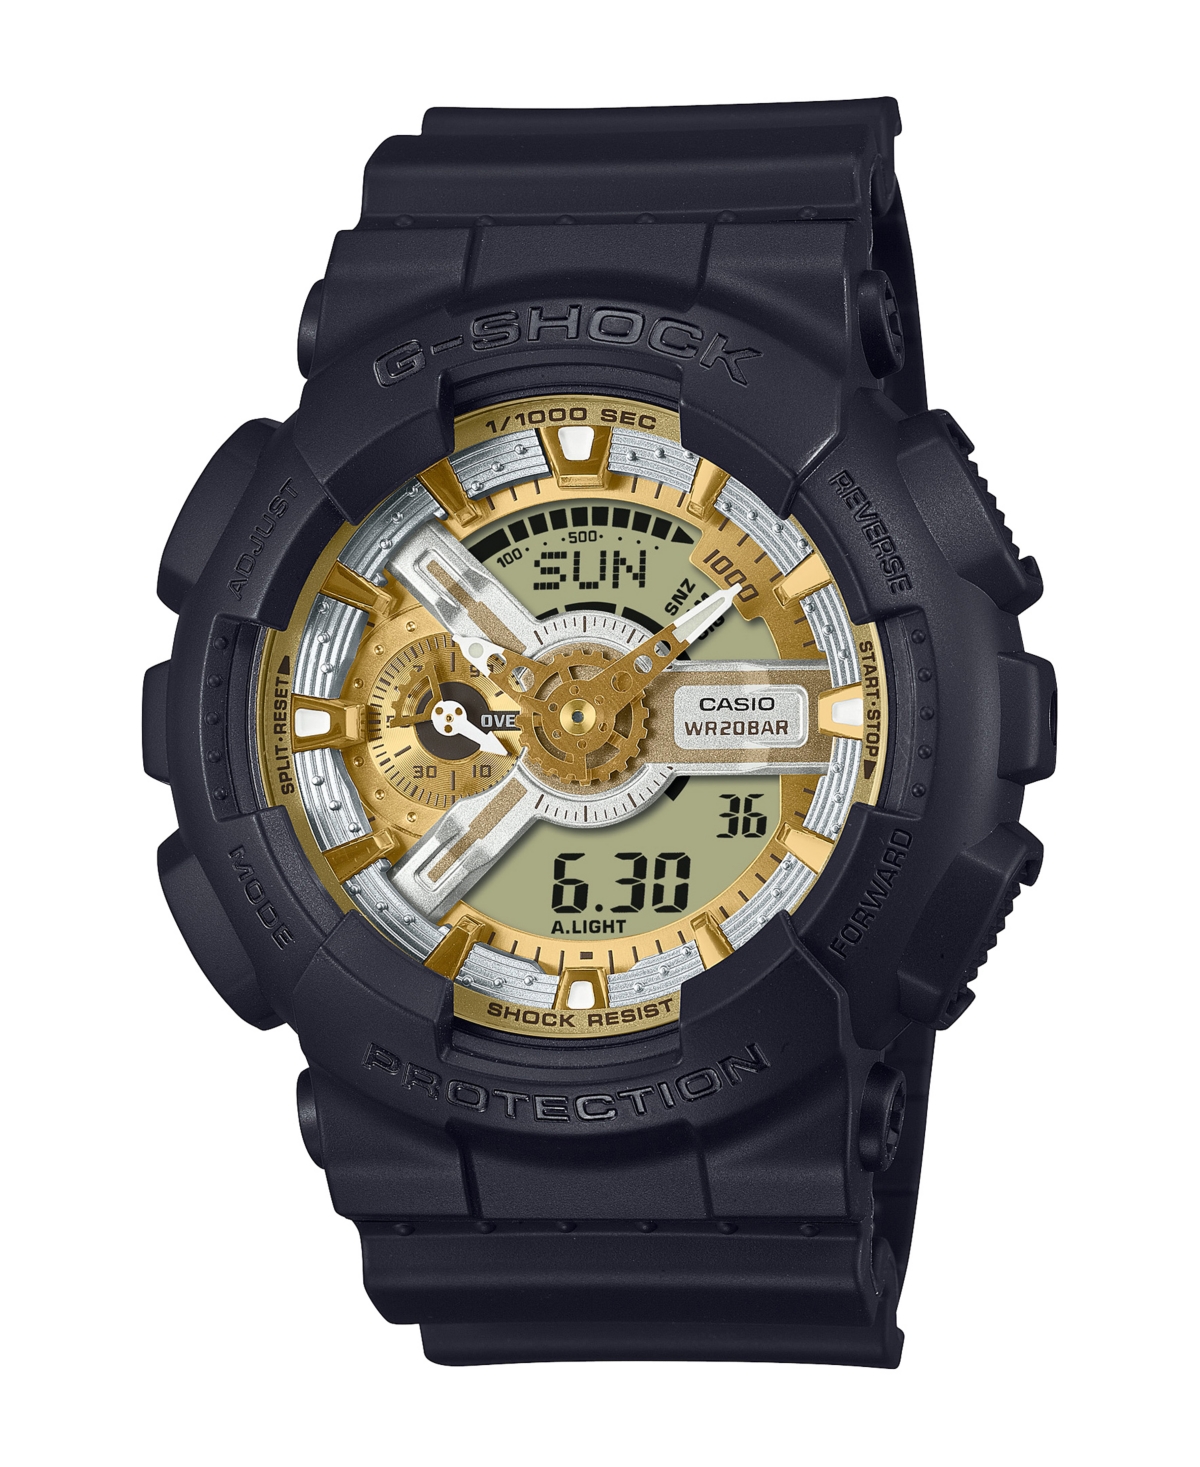 G-shock Men's Analog Digital Black Resin Watch, 51.2mm, Ga110cd-1a9